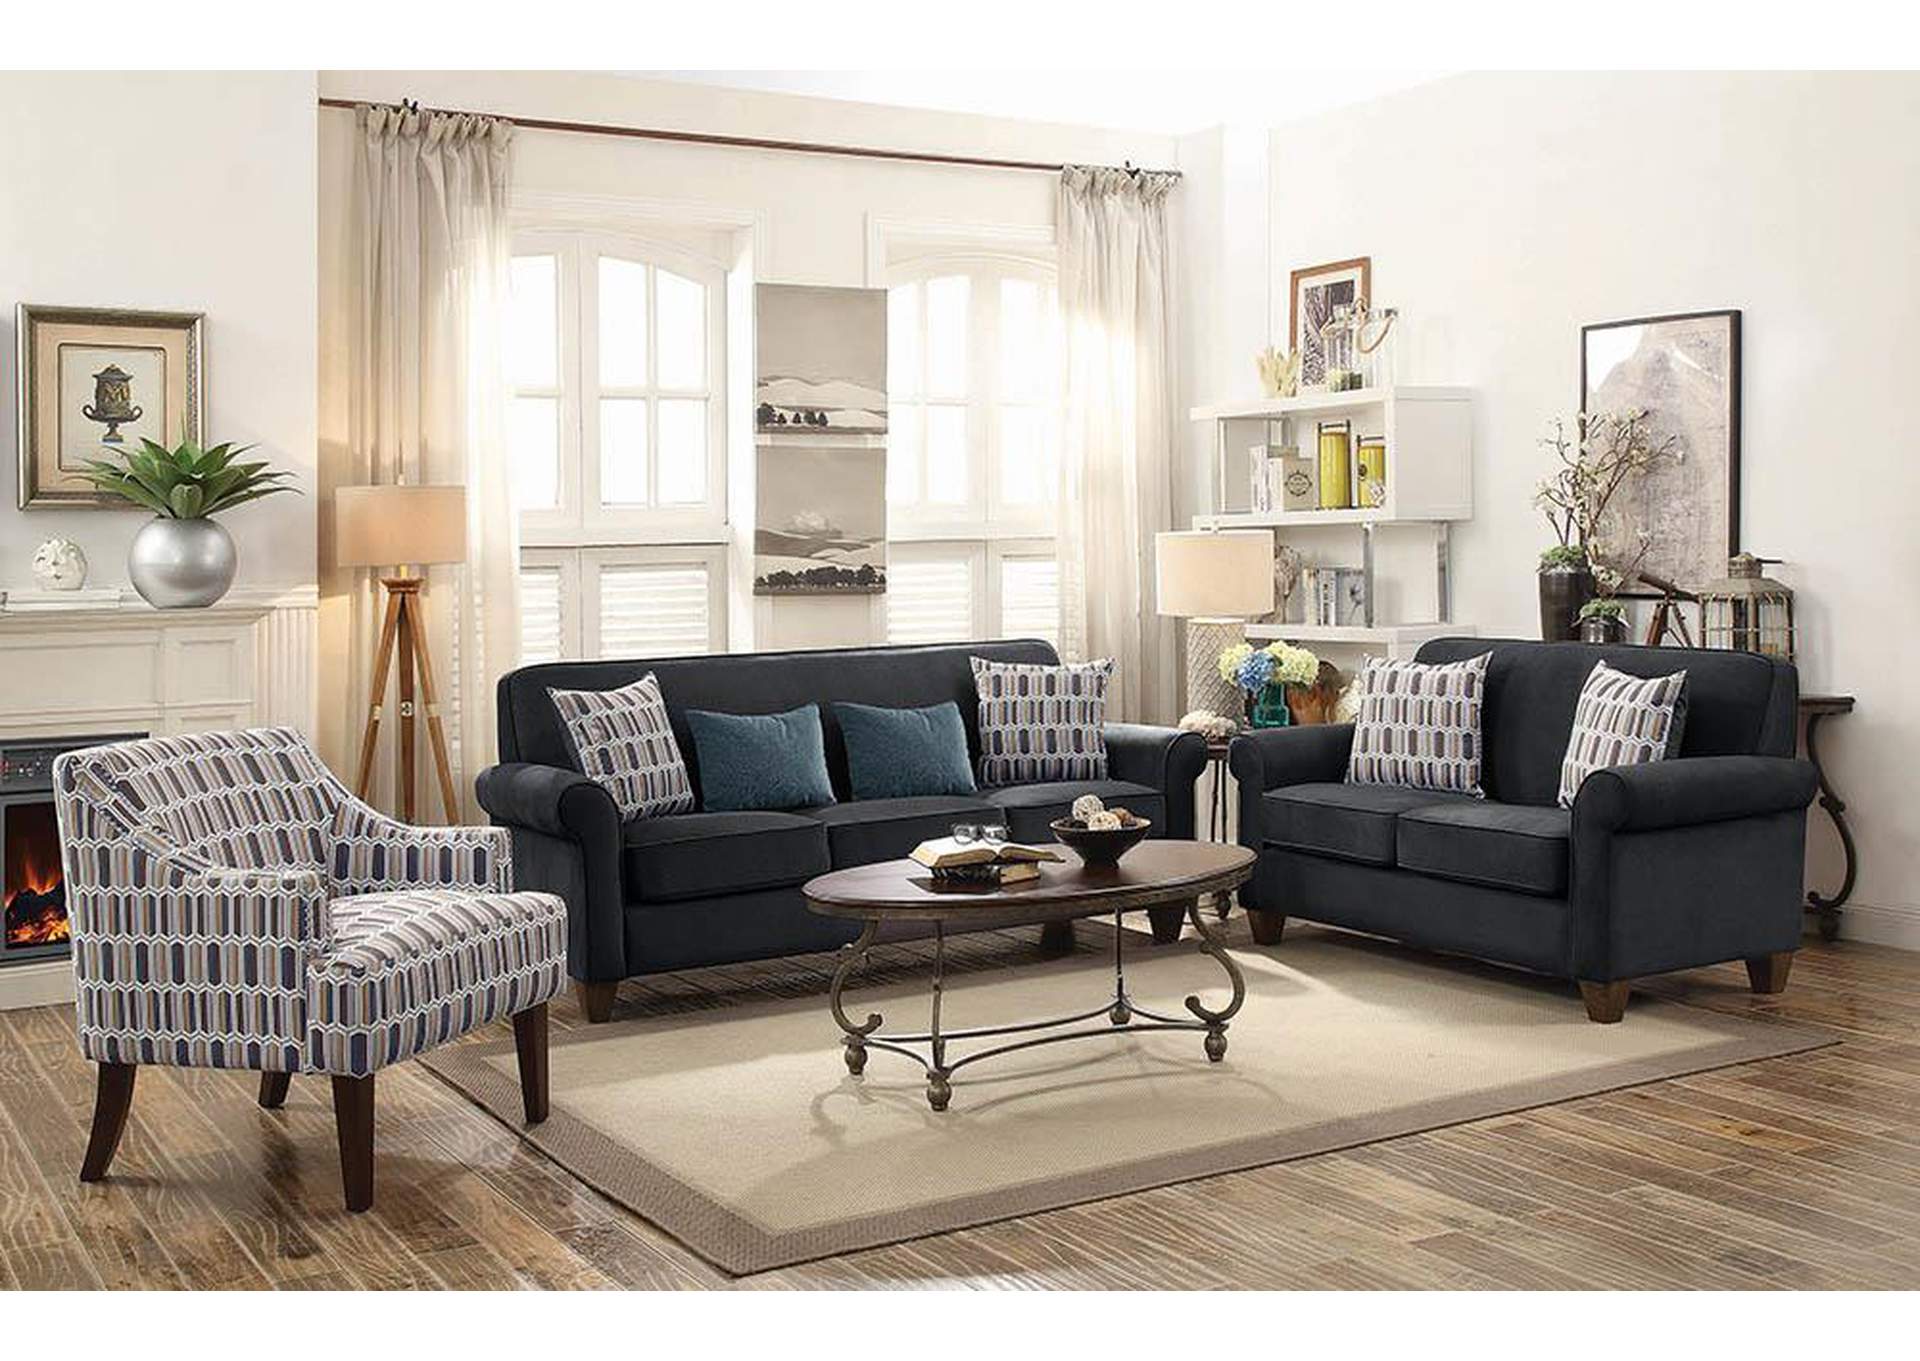 St-206 Graphite Sofa,Coaster Furniture